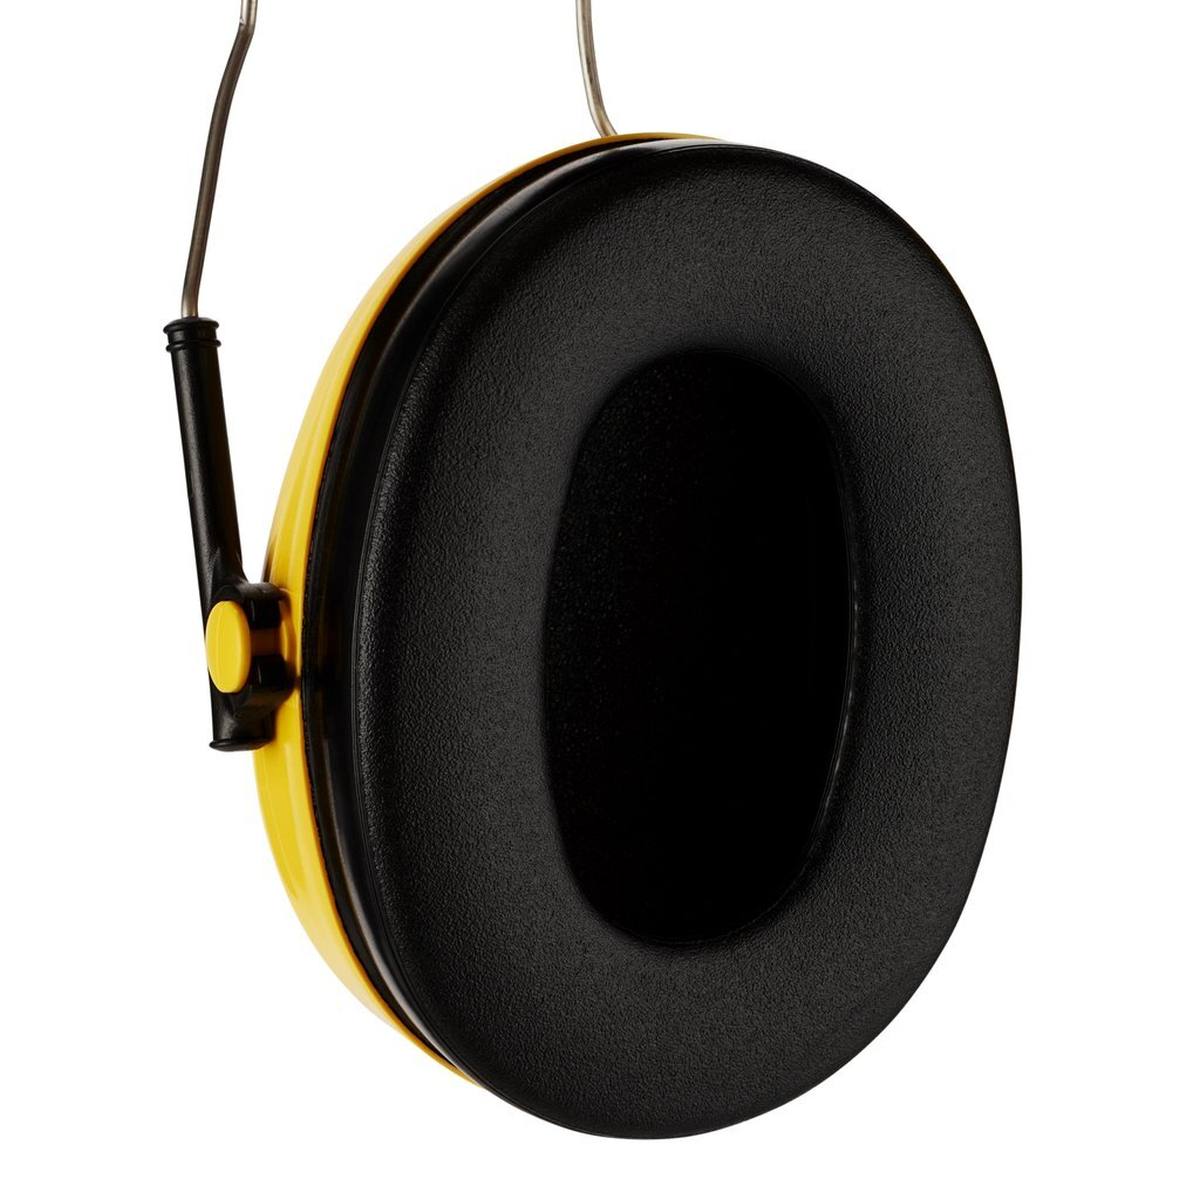 3M PELTOR Optime comfort earmuffs H510A (87 to 98 dB)